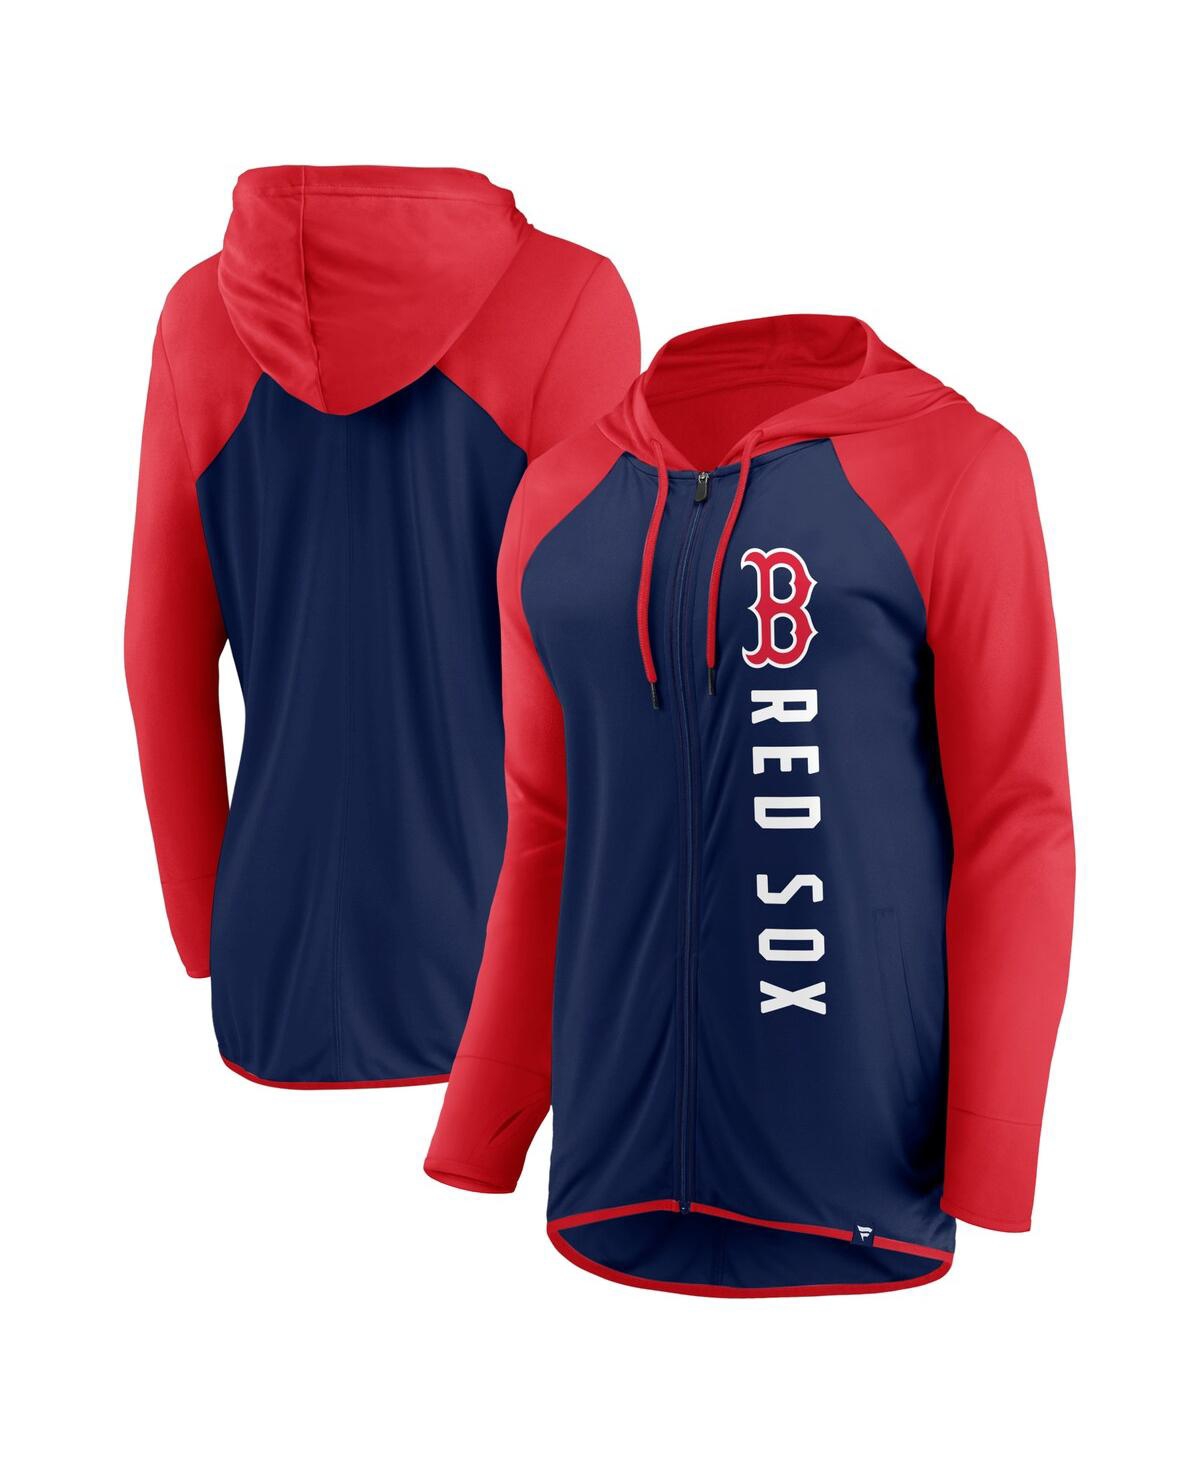 Women's Fanatics Navy, Red Boston Red Sox Forever Fan Full-Zip Hoodie Jacket - Navy, Red